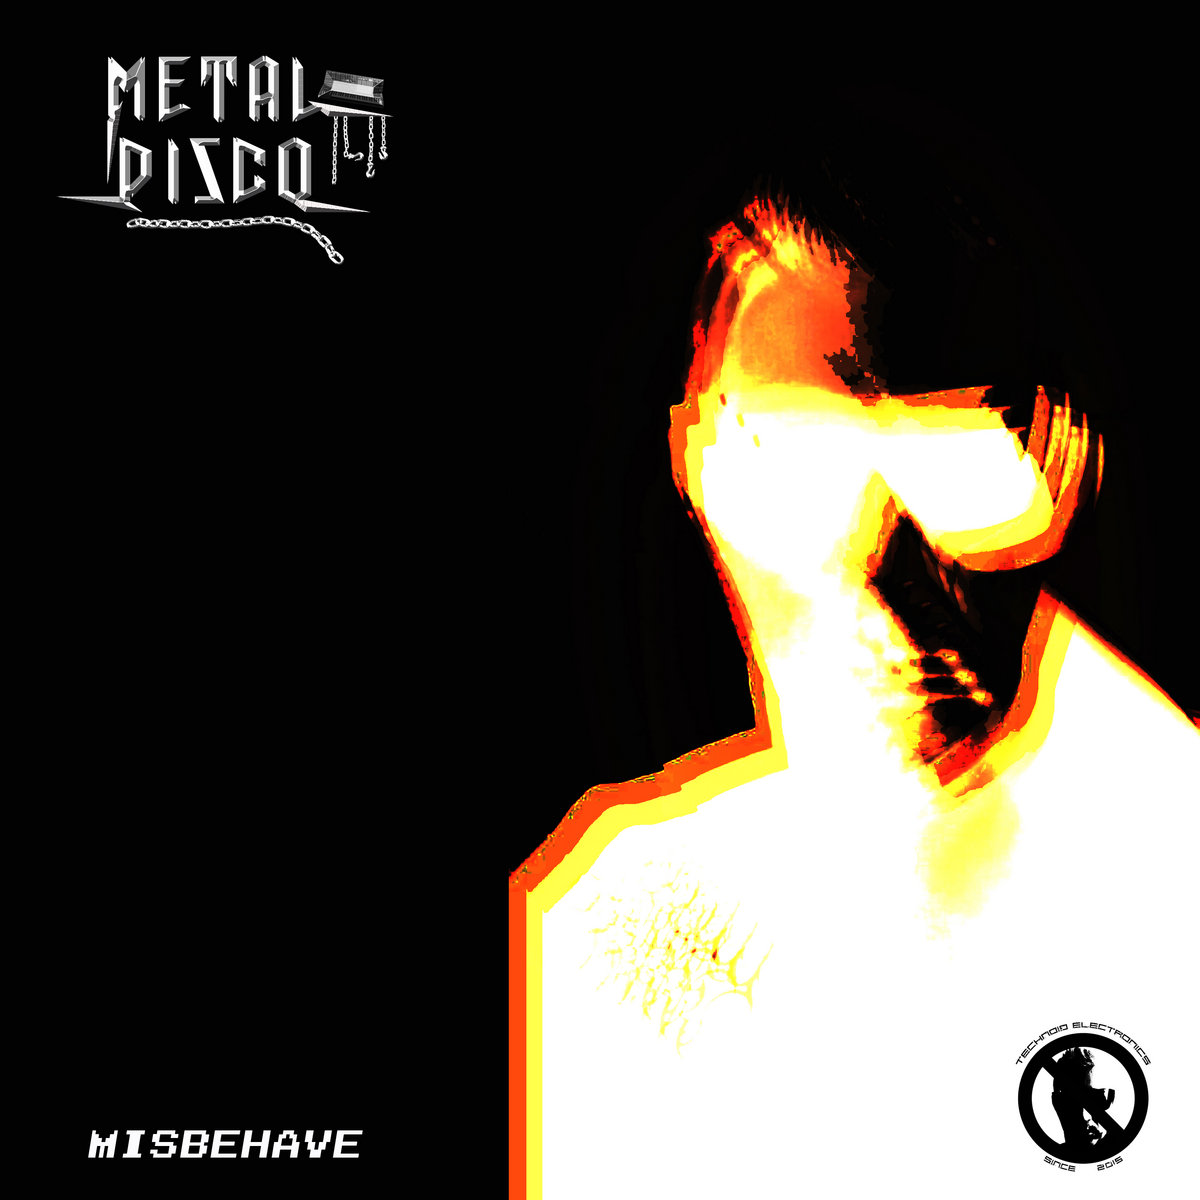 METAL DISCO cover